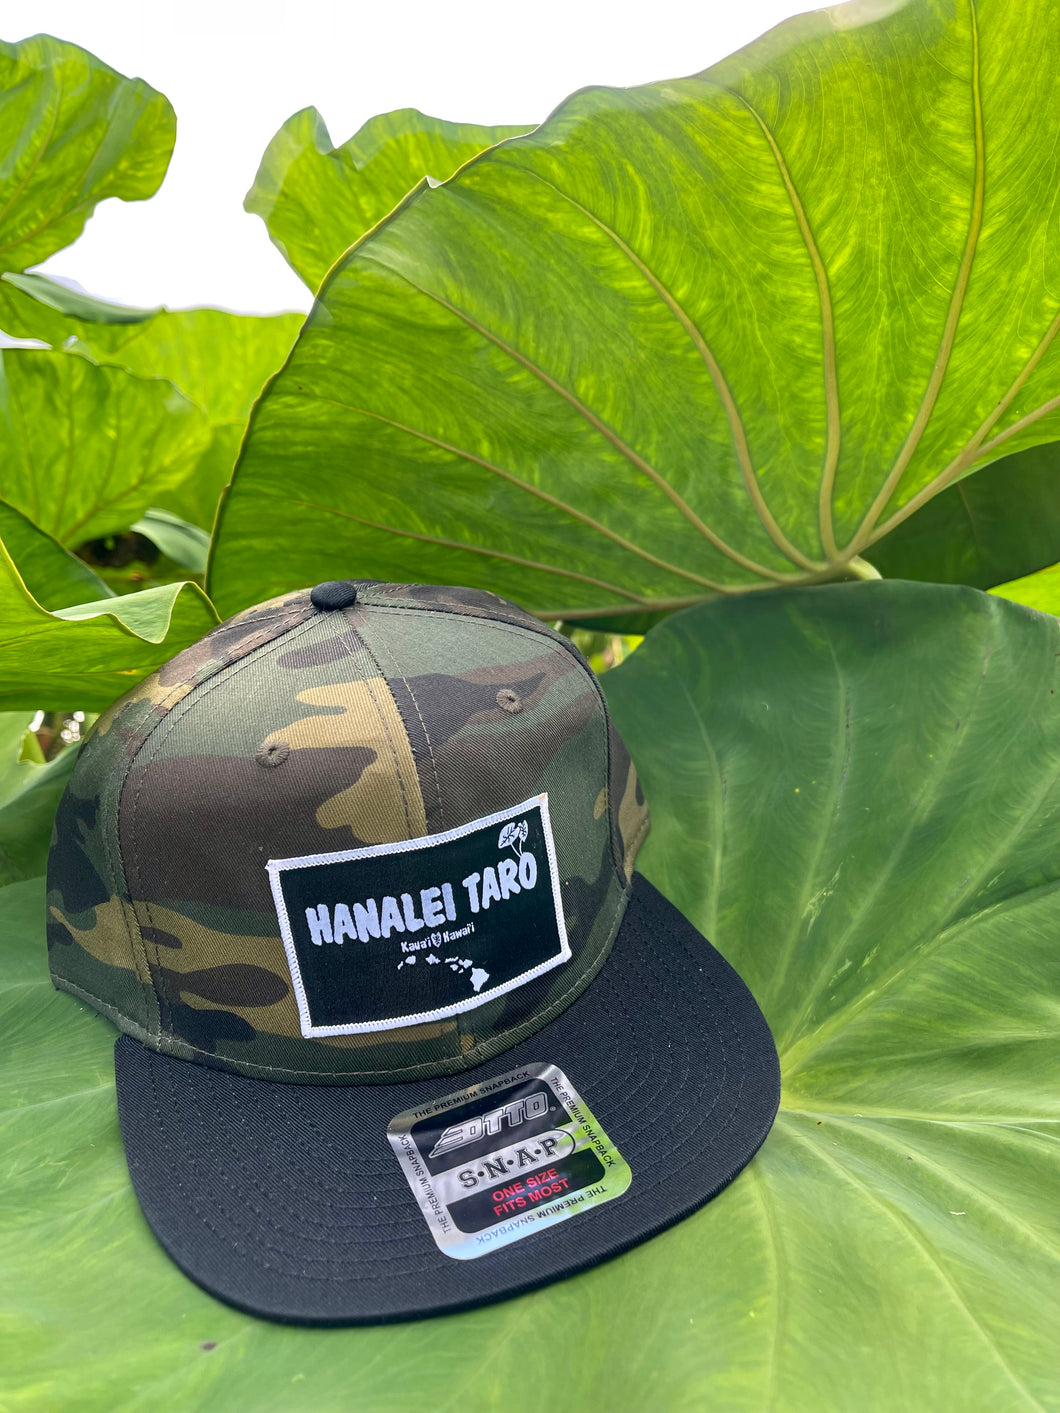 Hanalei Taro Patch & Hawaiian Islands Logo Hat- Camo SnapBack, Black Bill